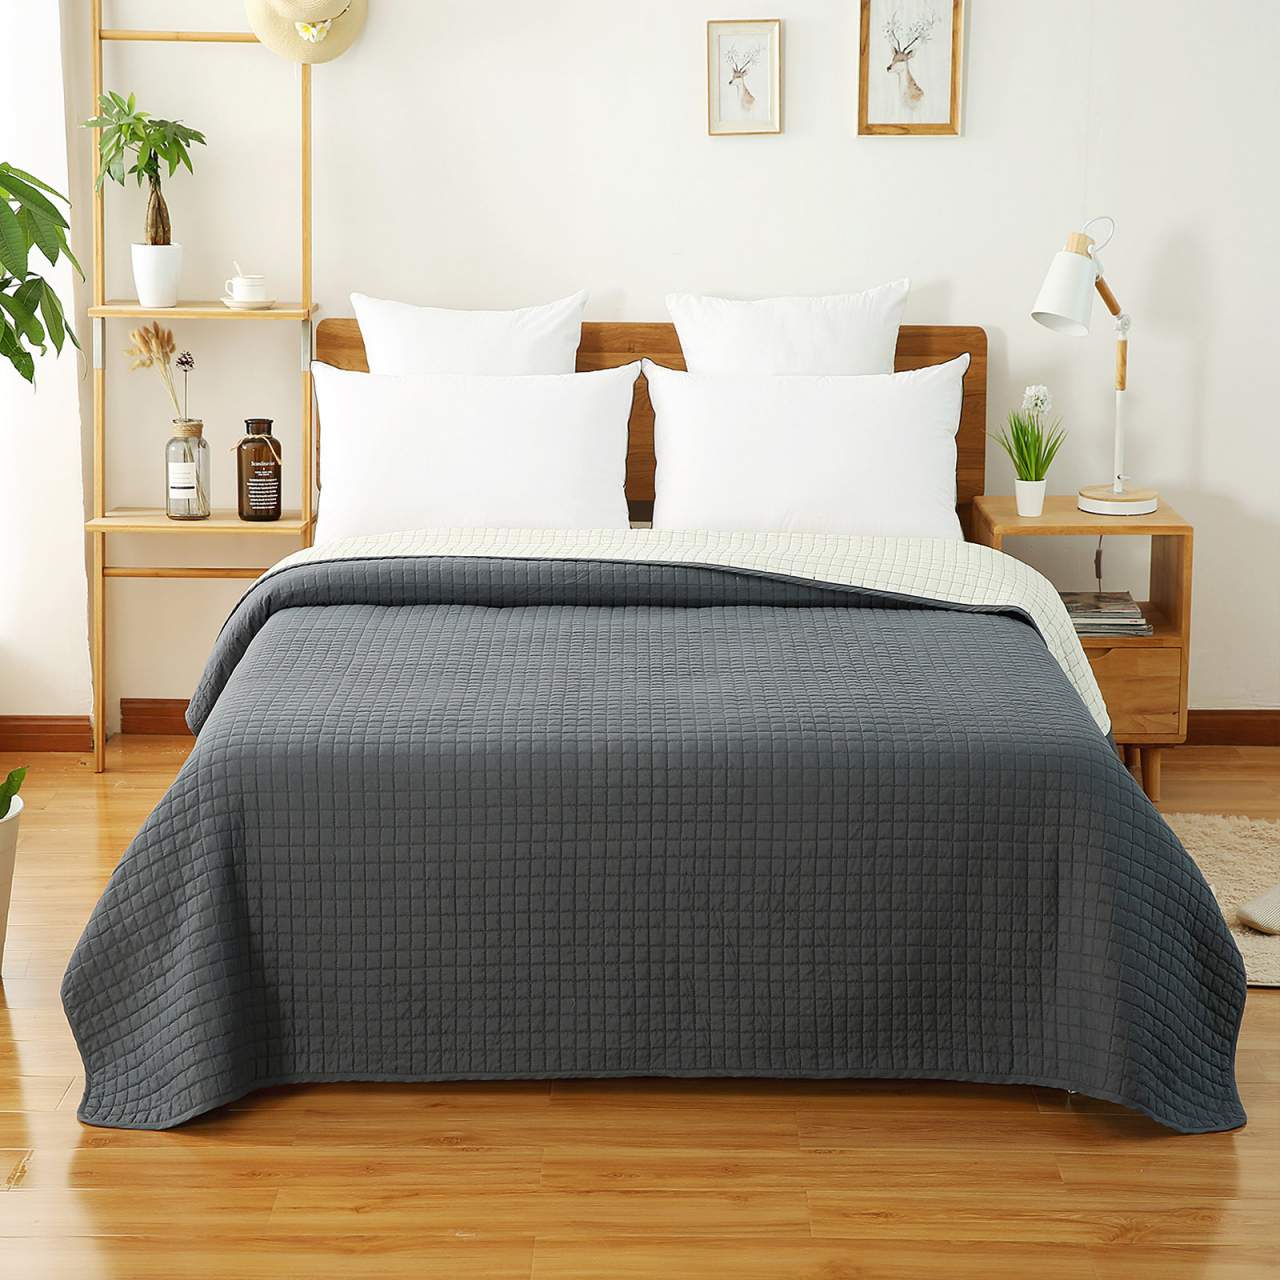 Tagesdecke Bettüberwurf Steppdecke Doppelseitig Decke Bettdecke 2in1 Grau Beige 